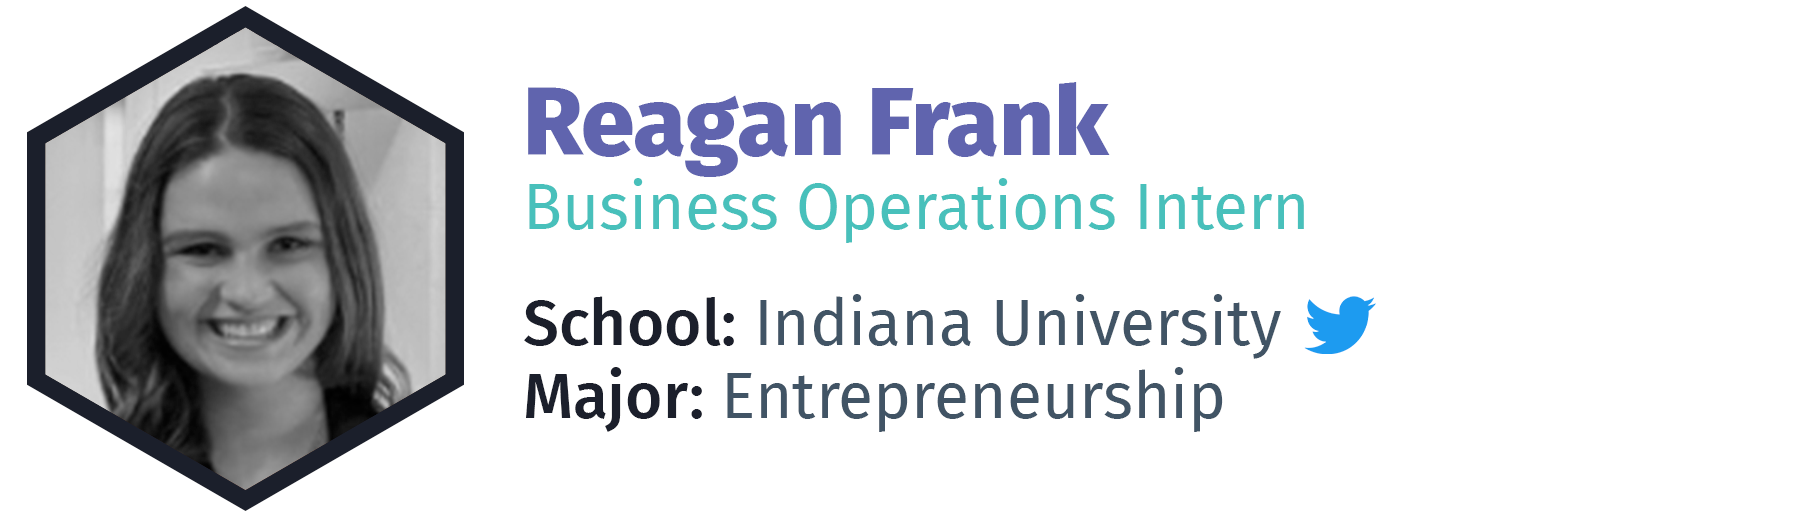 Reagan Frank - Business Operations Intern